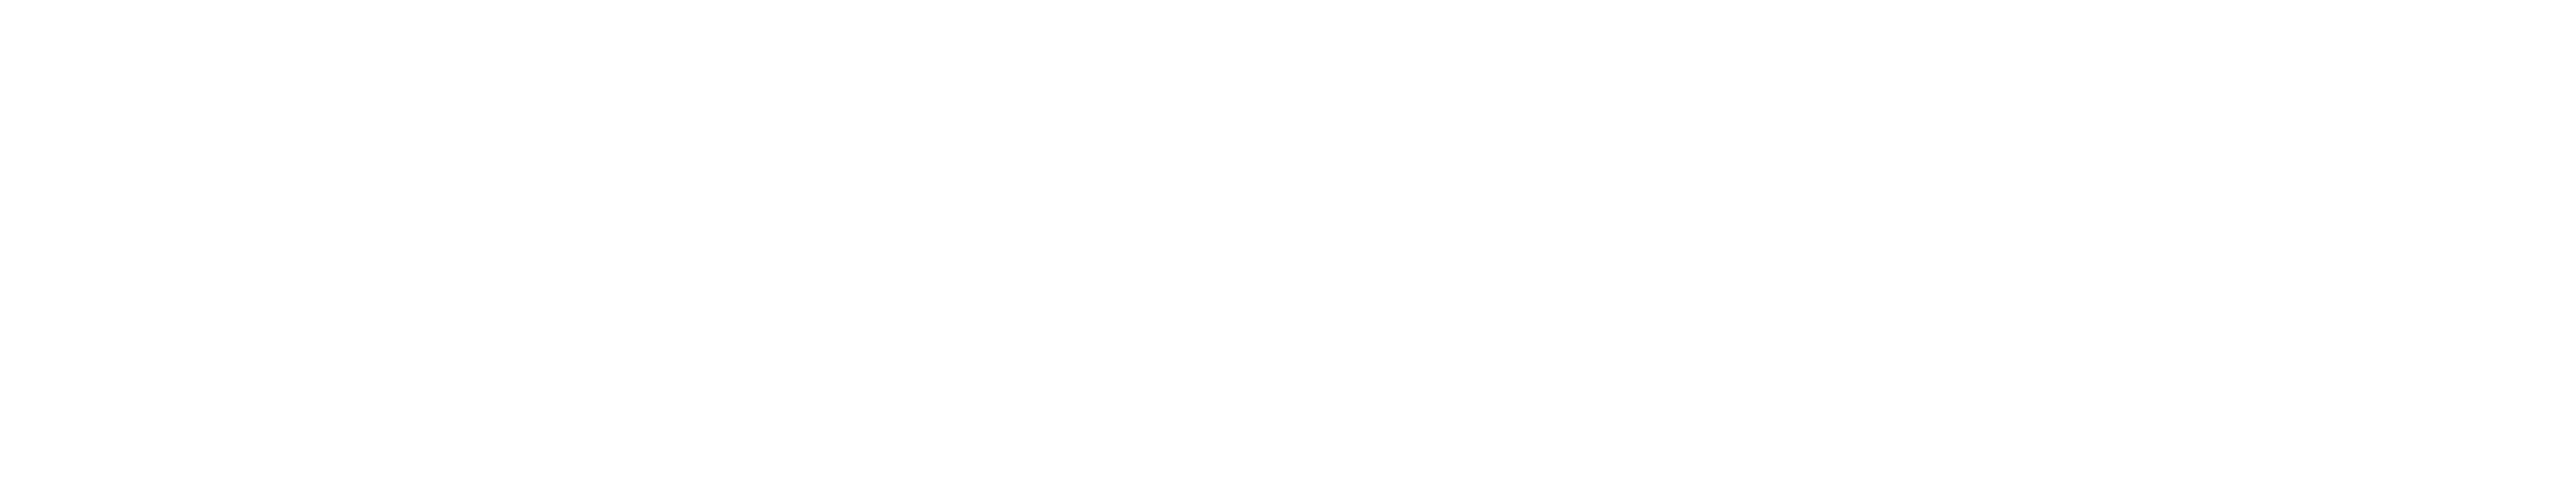 Northwest Tri-County Intermediate Unit 5 logo